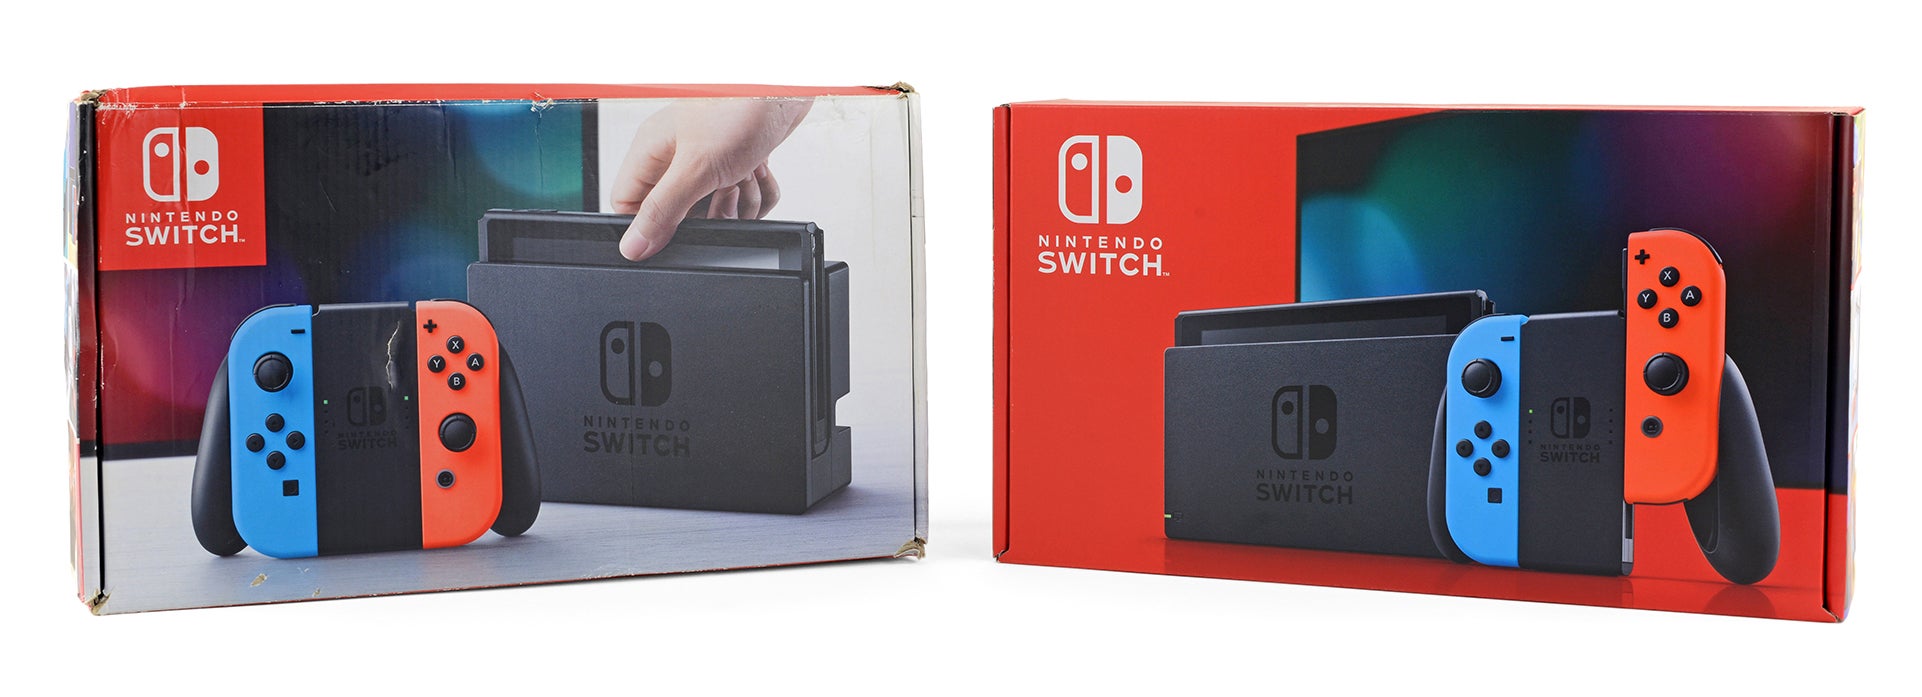 Nintendo switch v. Nintendo Switch 2. Нинтендо свитч 2017. Коробка Нинтендо свитч 2. Nintendo Switch v1.